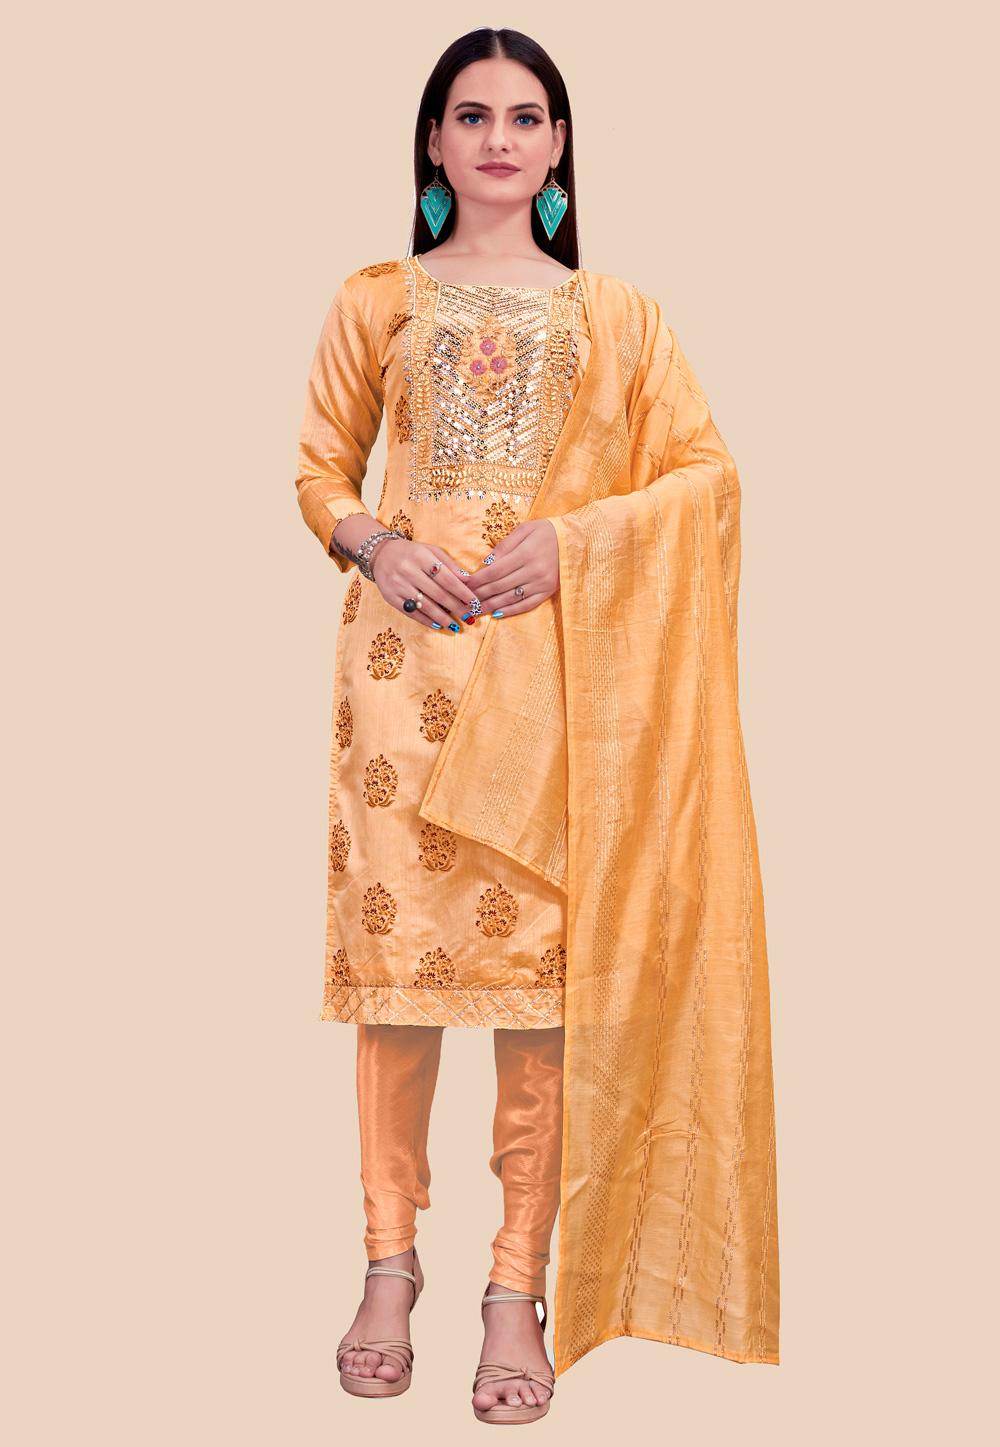 Urban Fashion Churidar Legging Suit in Orange Embroidered Fabric LSTV116723